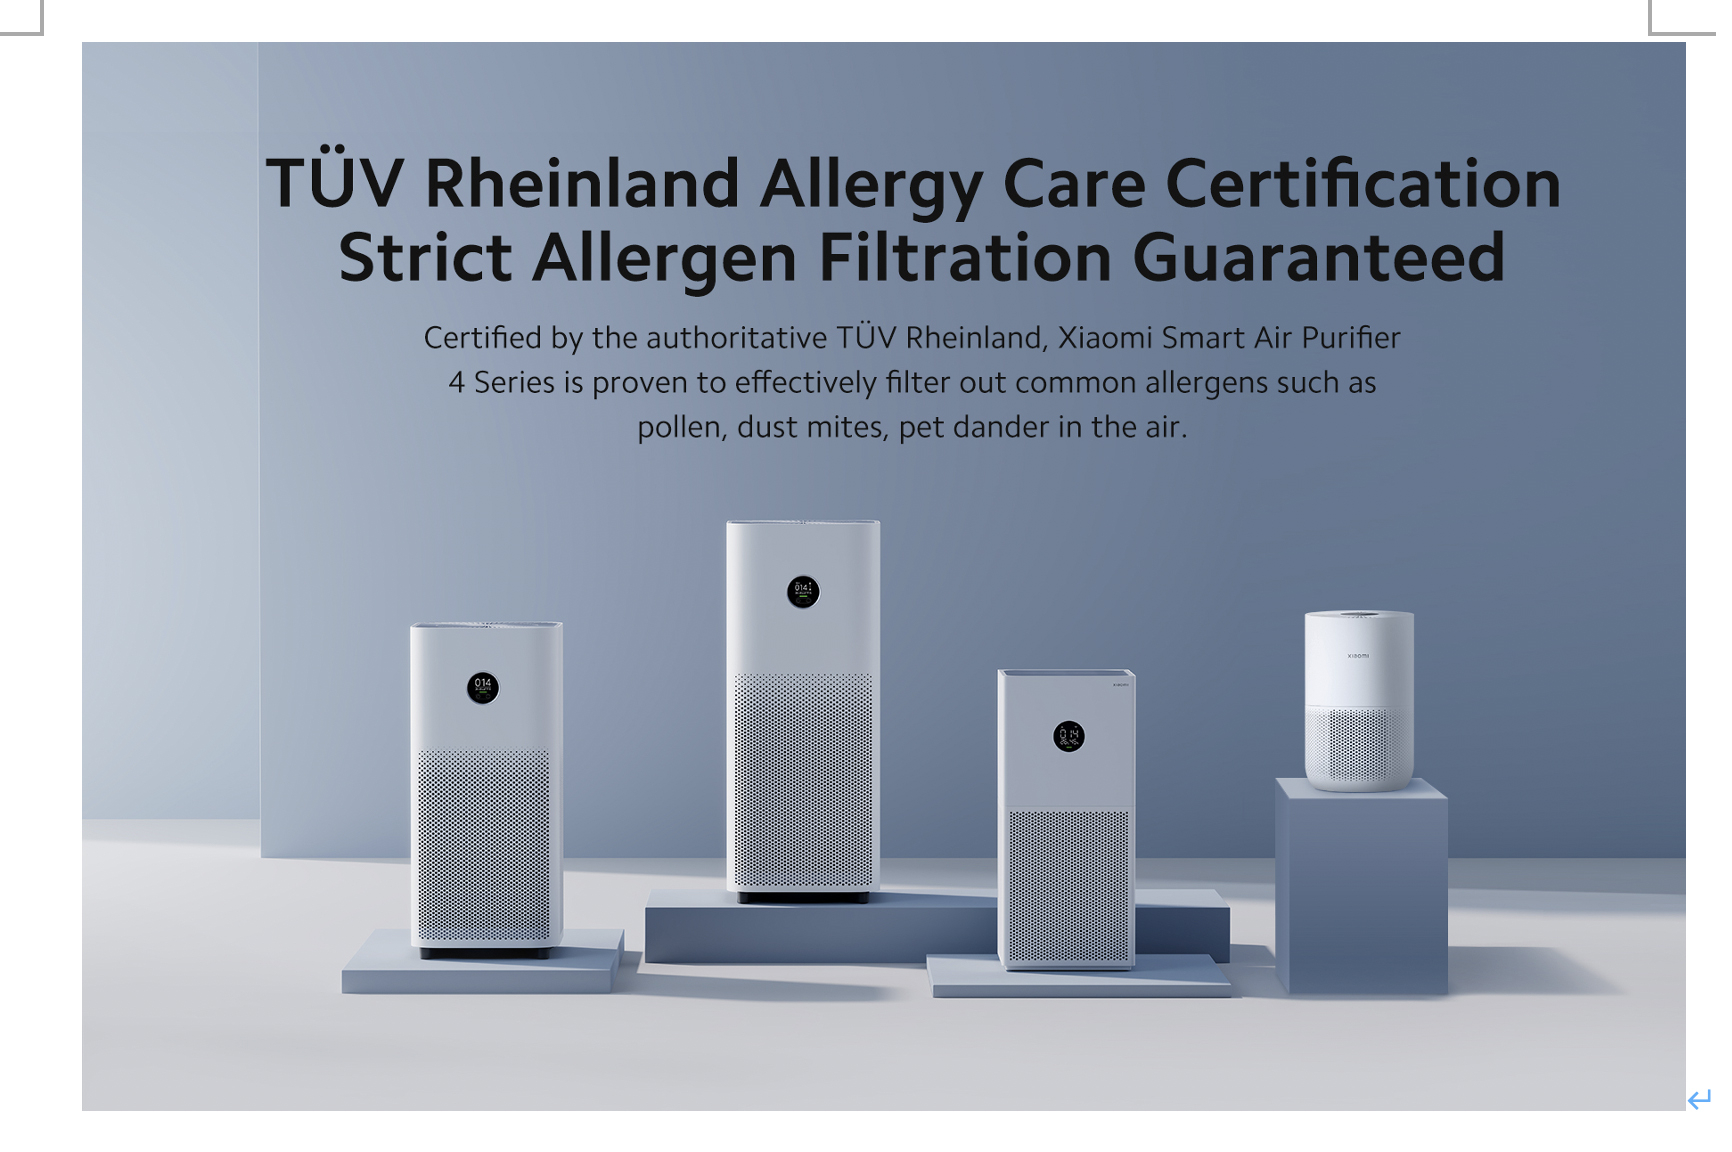 Xiaomi Smart Air Purifier 4 Compact Received TÜV Rheinland Allergy Care  Certification